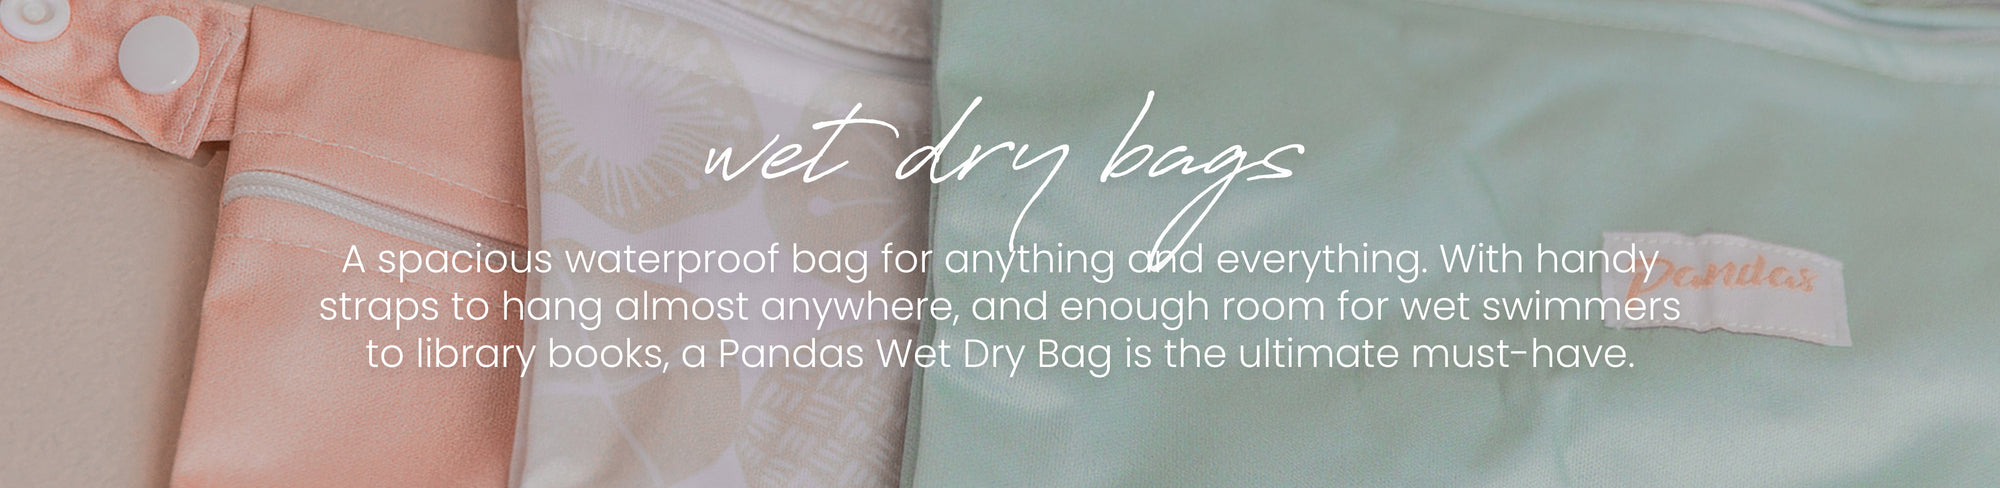 Pandas wet/dry reusable bags